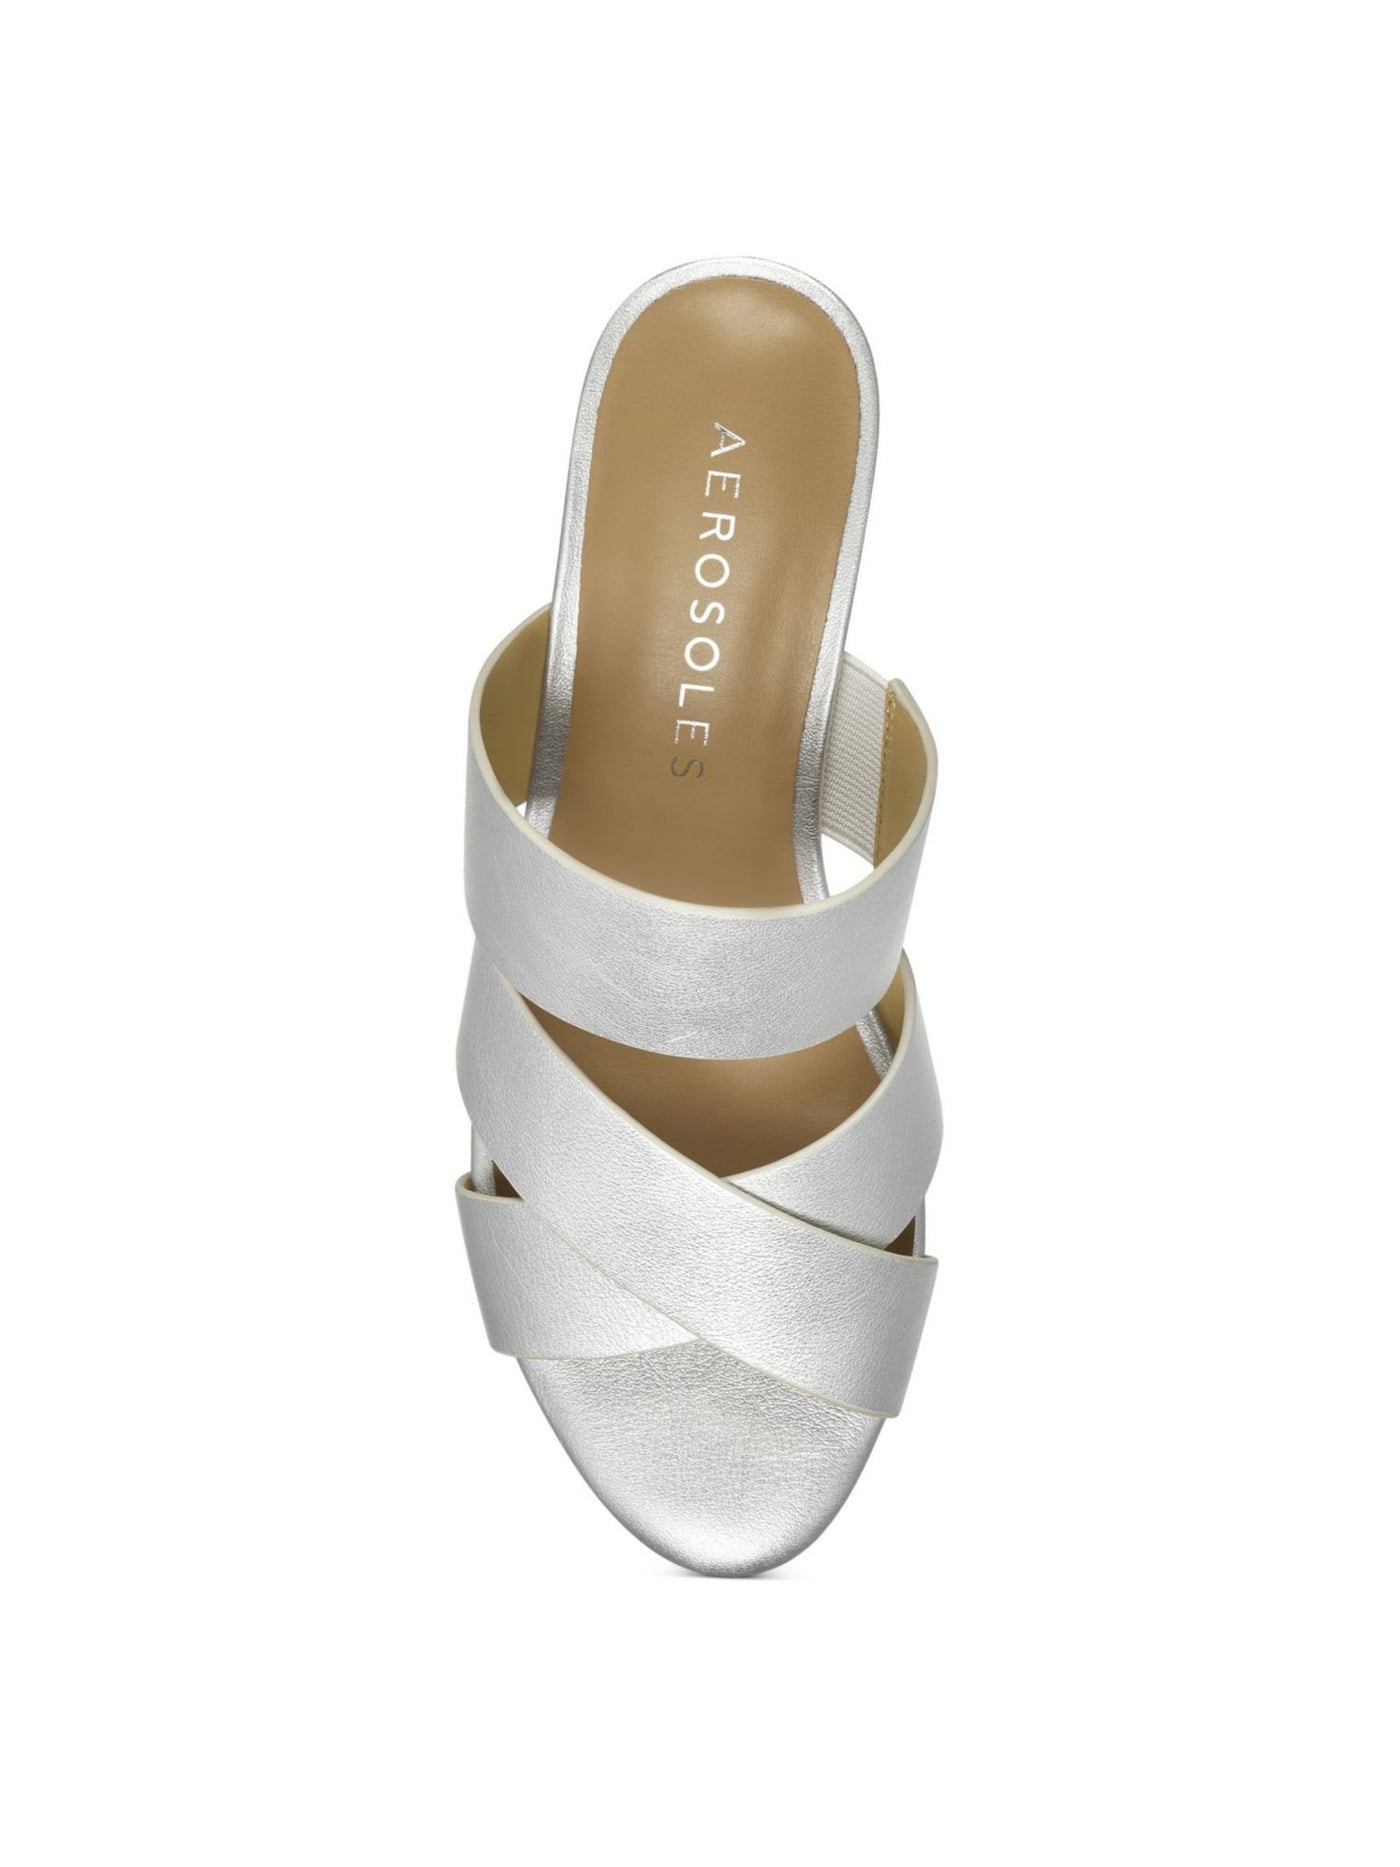 AEROSOLES Womens Silver Metallic Crisscross Straps Goring Comfort Westfield Almond Toe Wedge Slip On Leather Slide Sandals Shoes 6 M